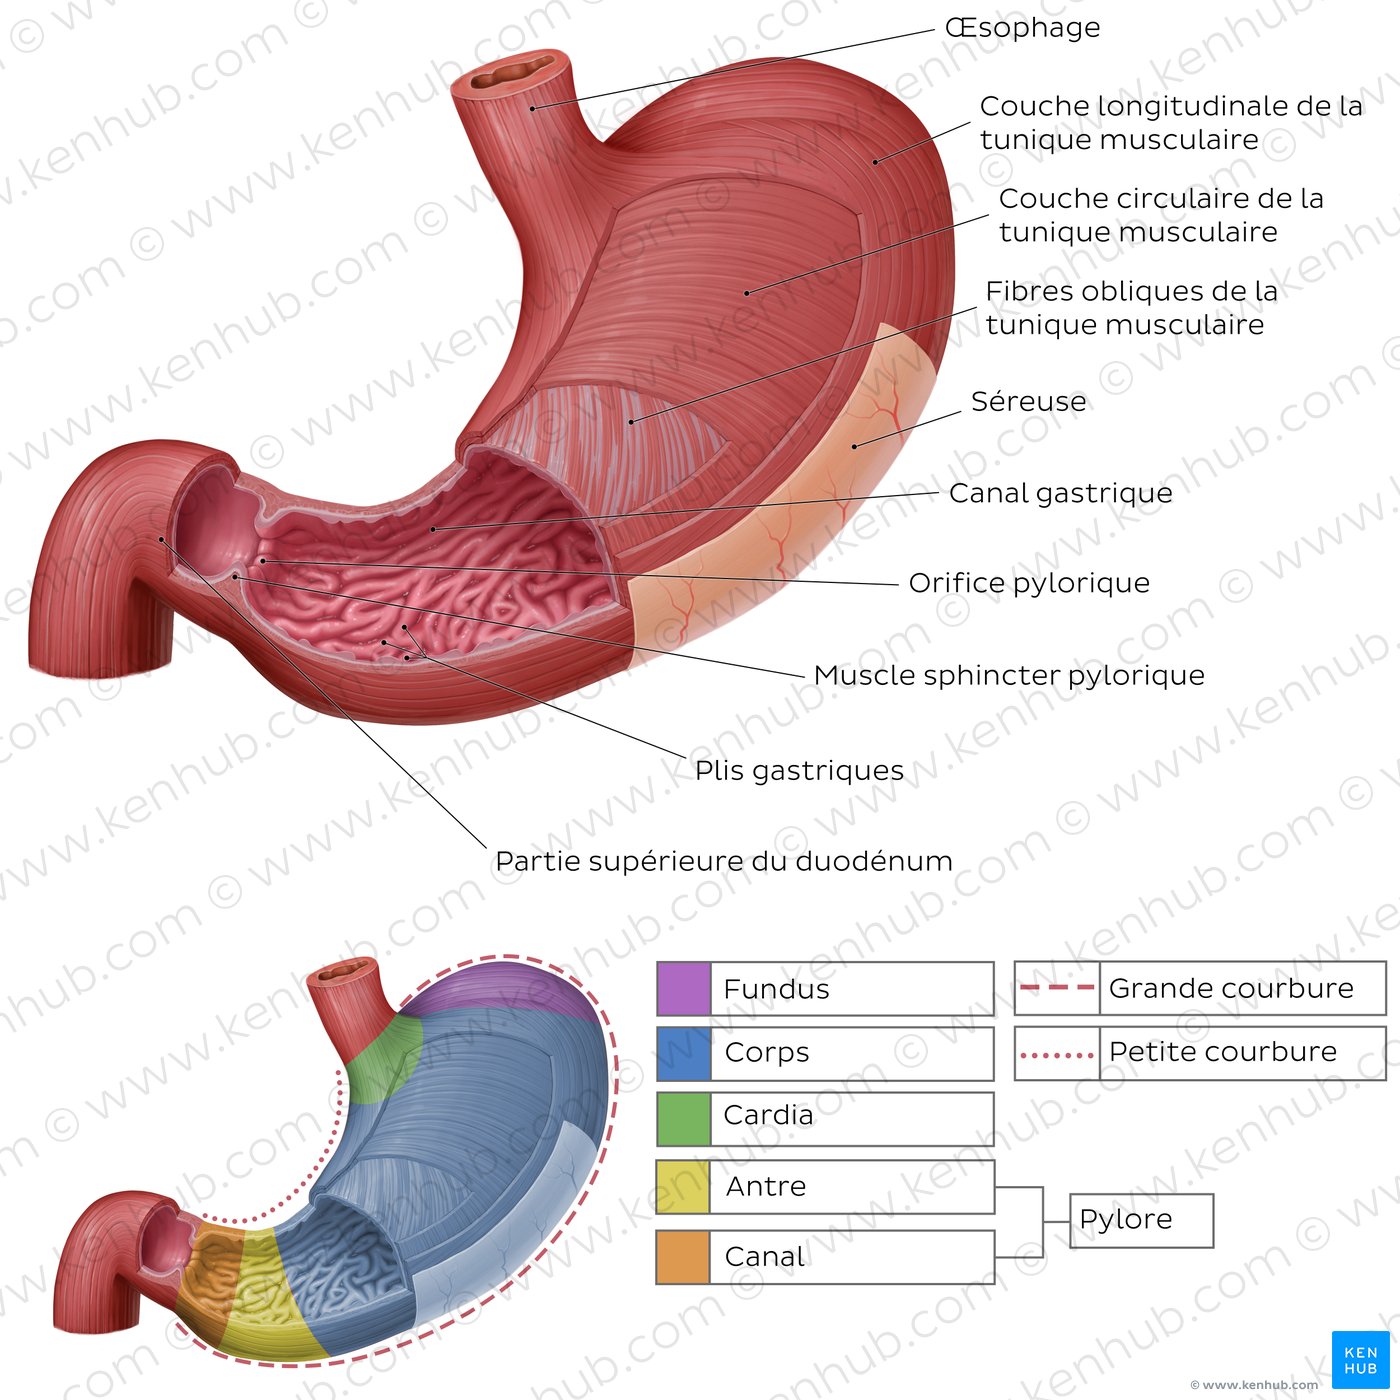 Anatomie de l’estomac (schéma)